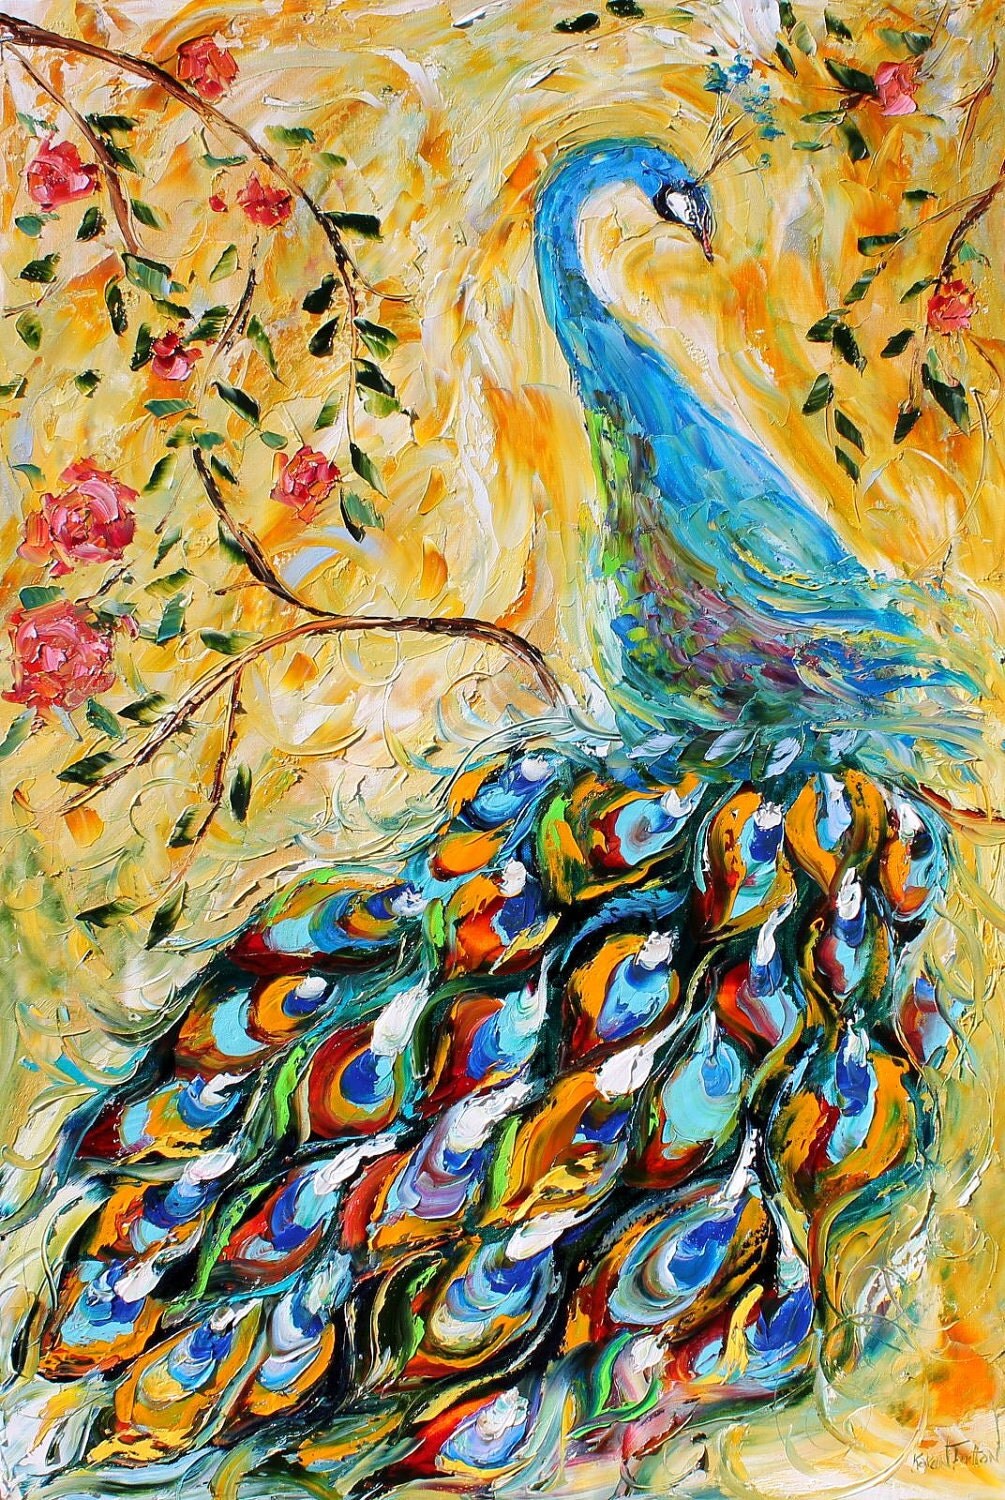 Original Peacock Oil Painting Textured Palette by Karensfineart